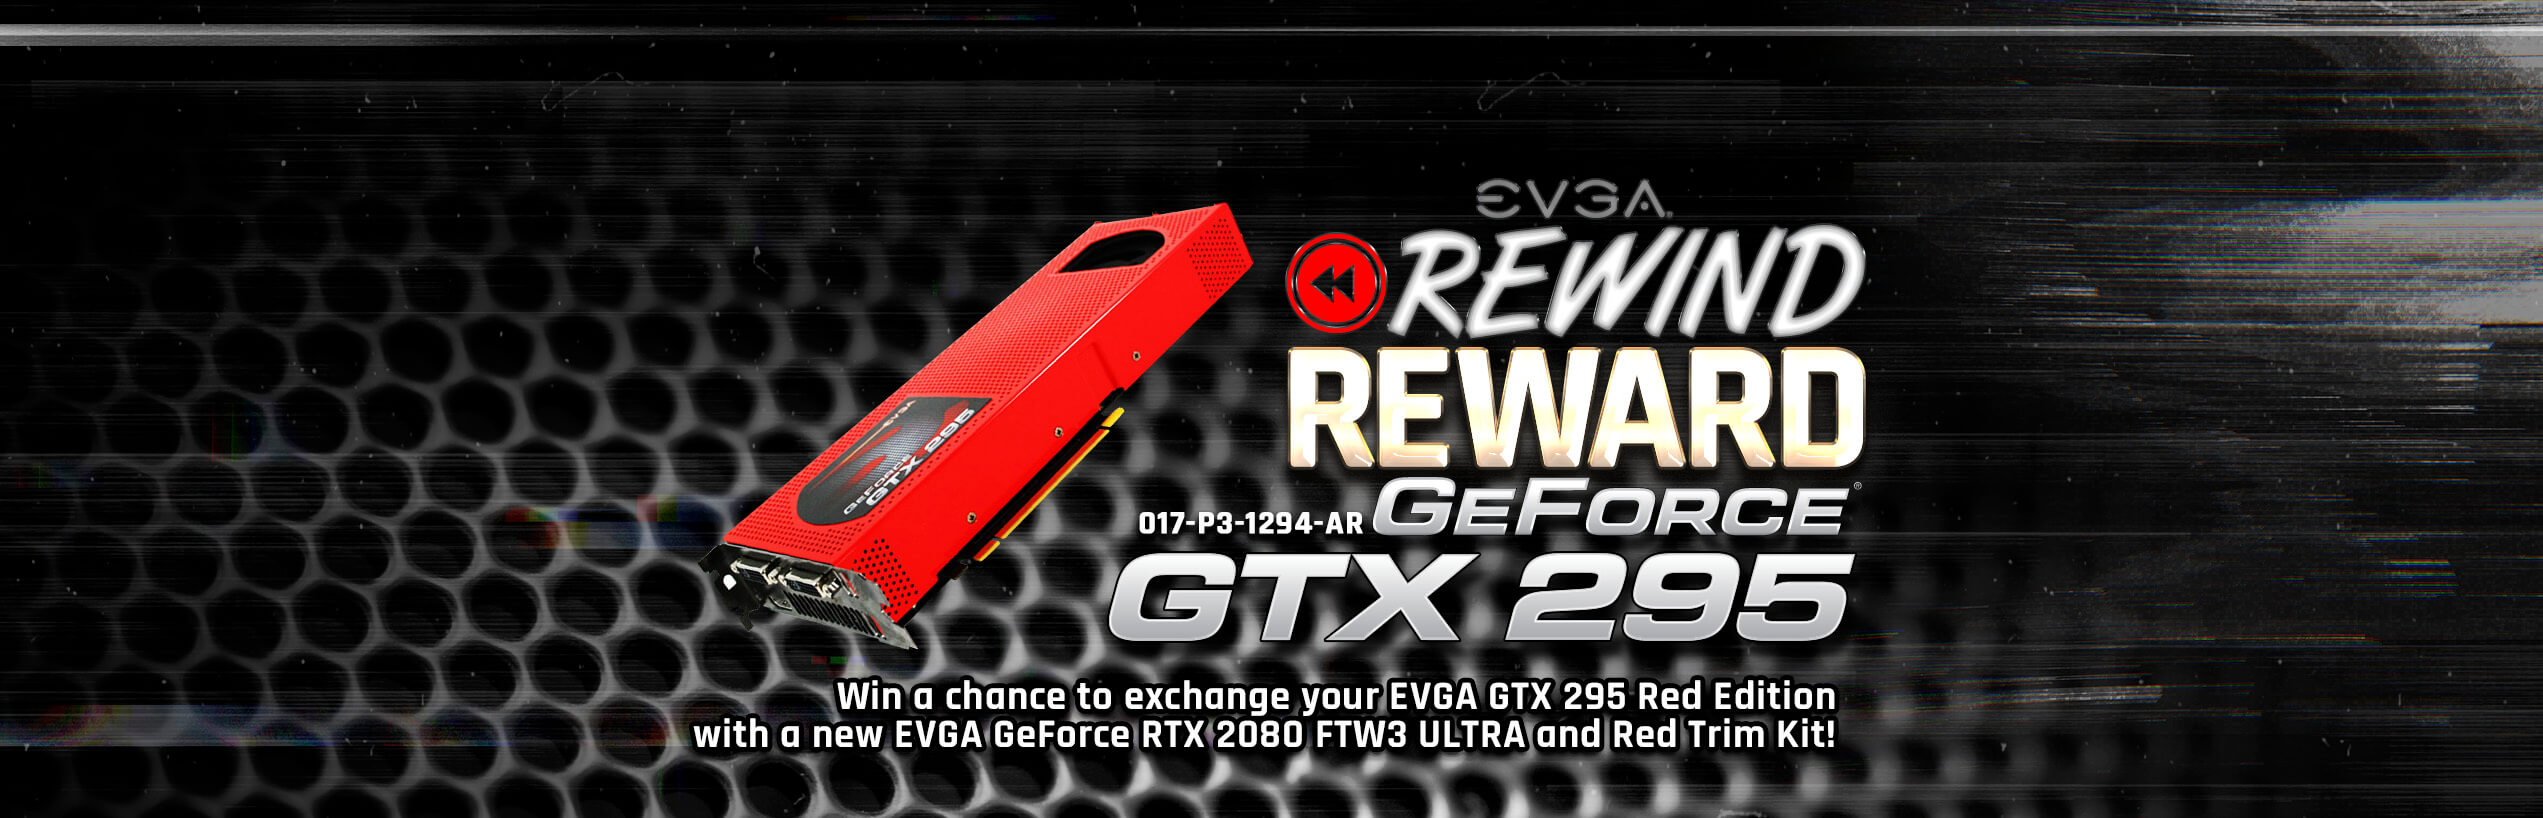 EVGA GeForce GTX 295 Red Edition to EVGA GeForce RTX 2080 FTW3 w/ Red Trim Kit